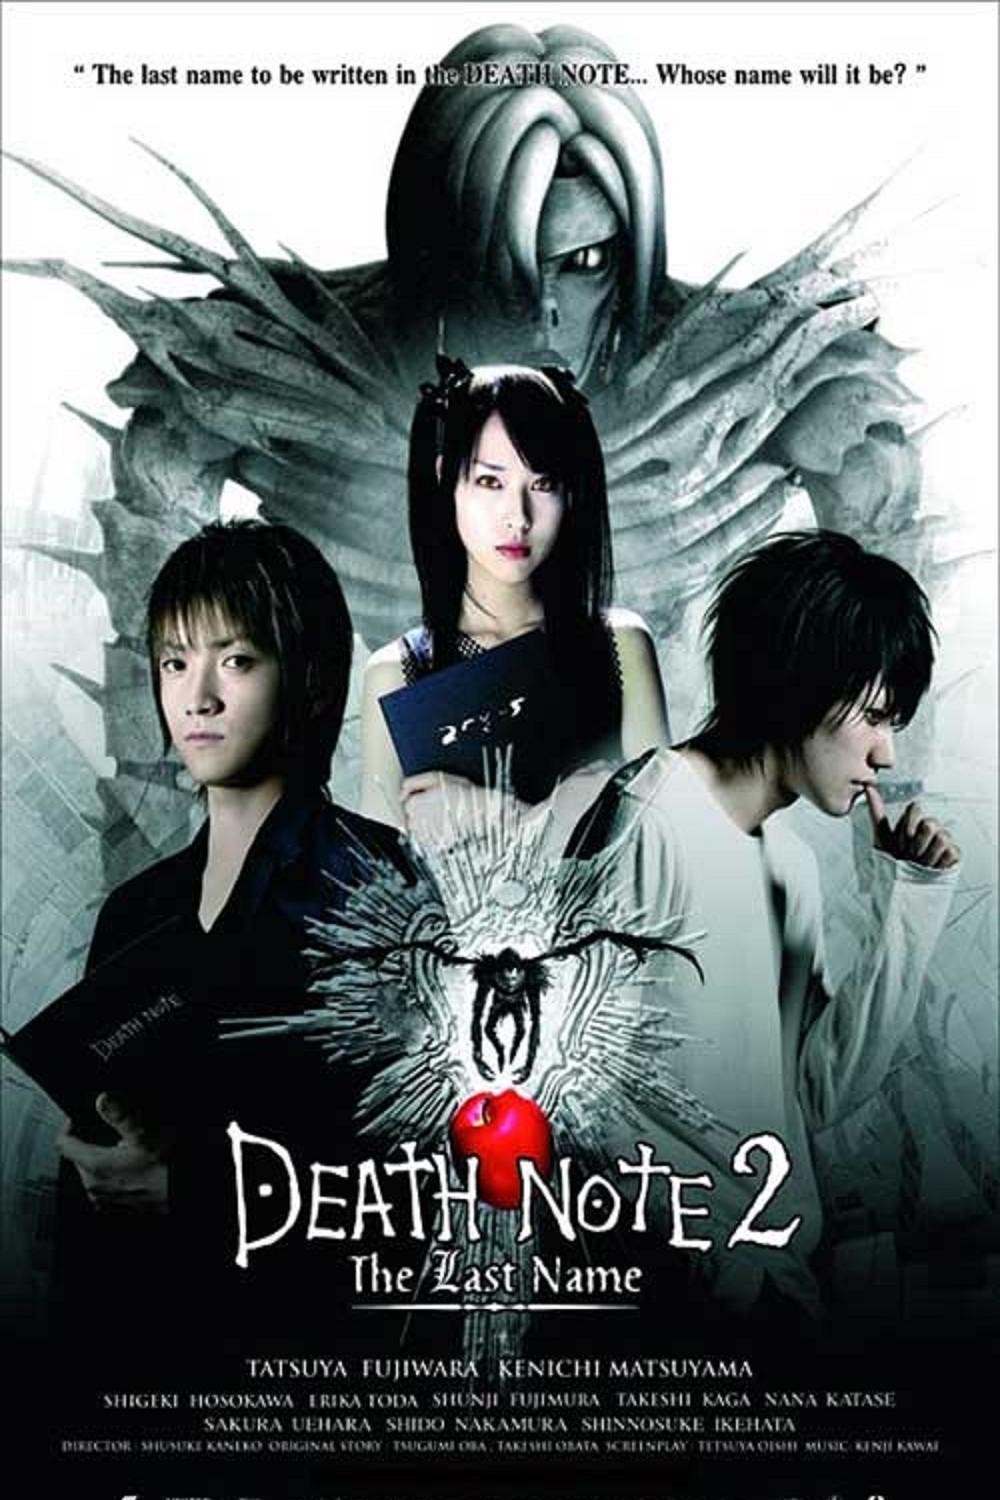 Death Note (2006 film) - Wikipedia